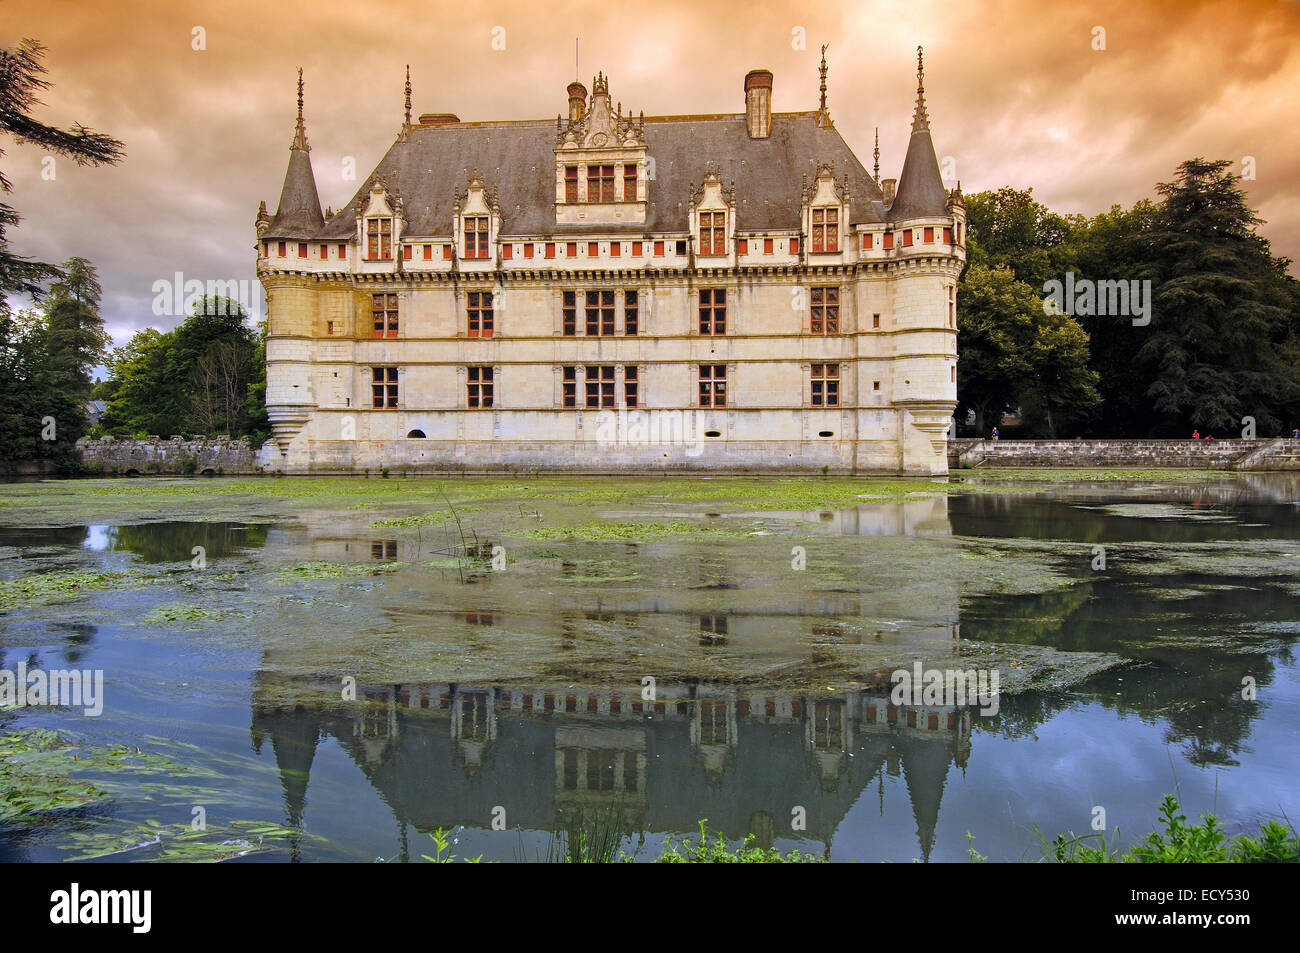 Azay-le-Rideau chateau, Castle of Azay-le-Rideau, built from 1518 to ...